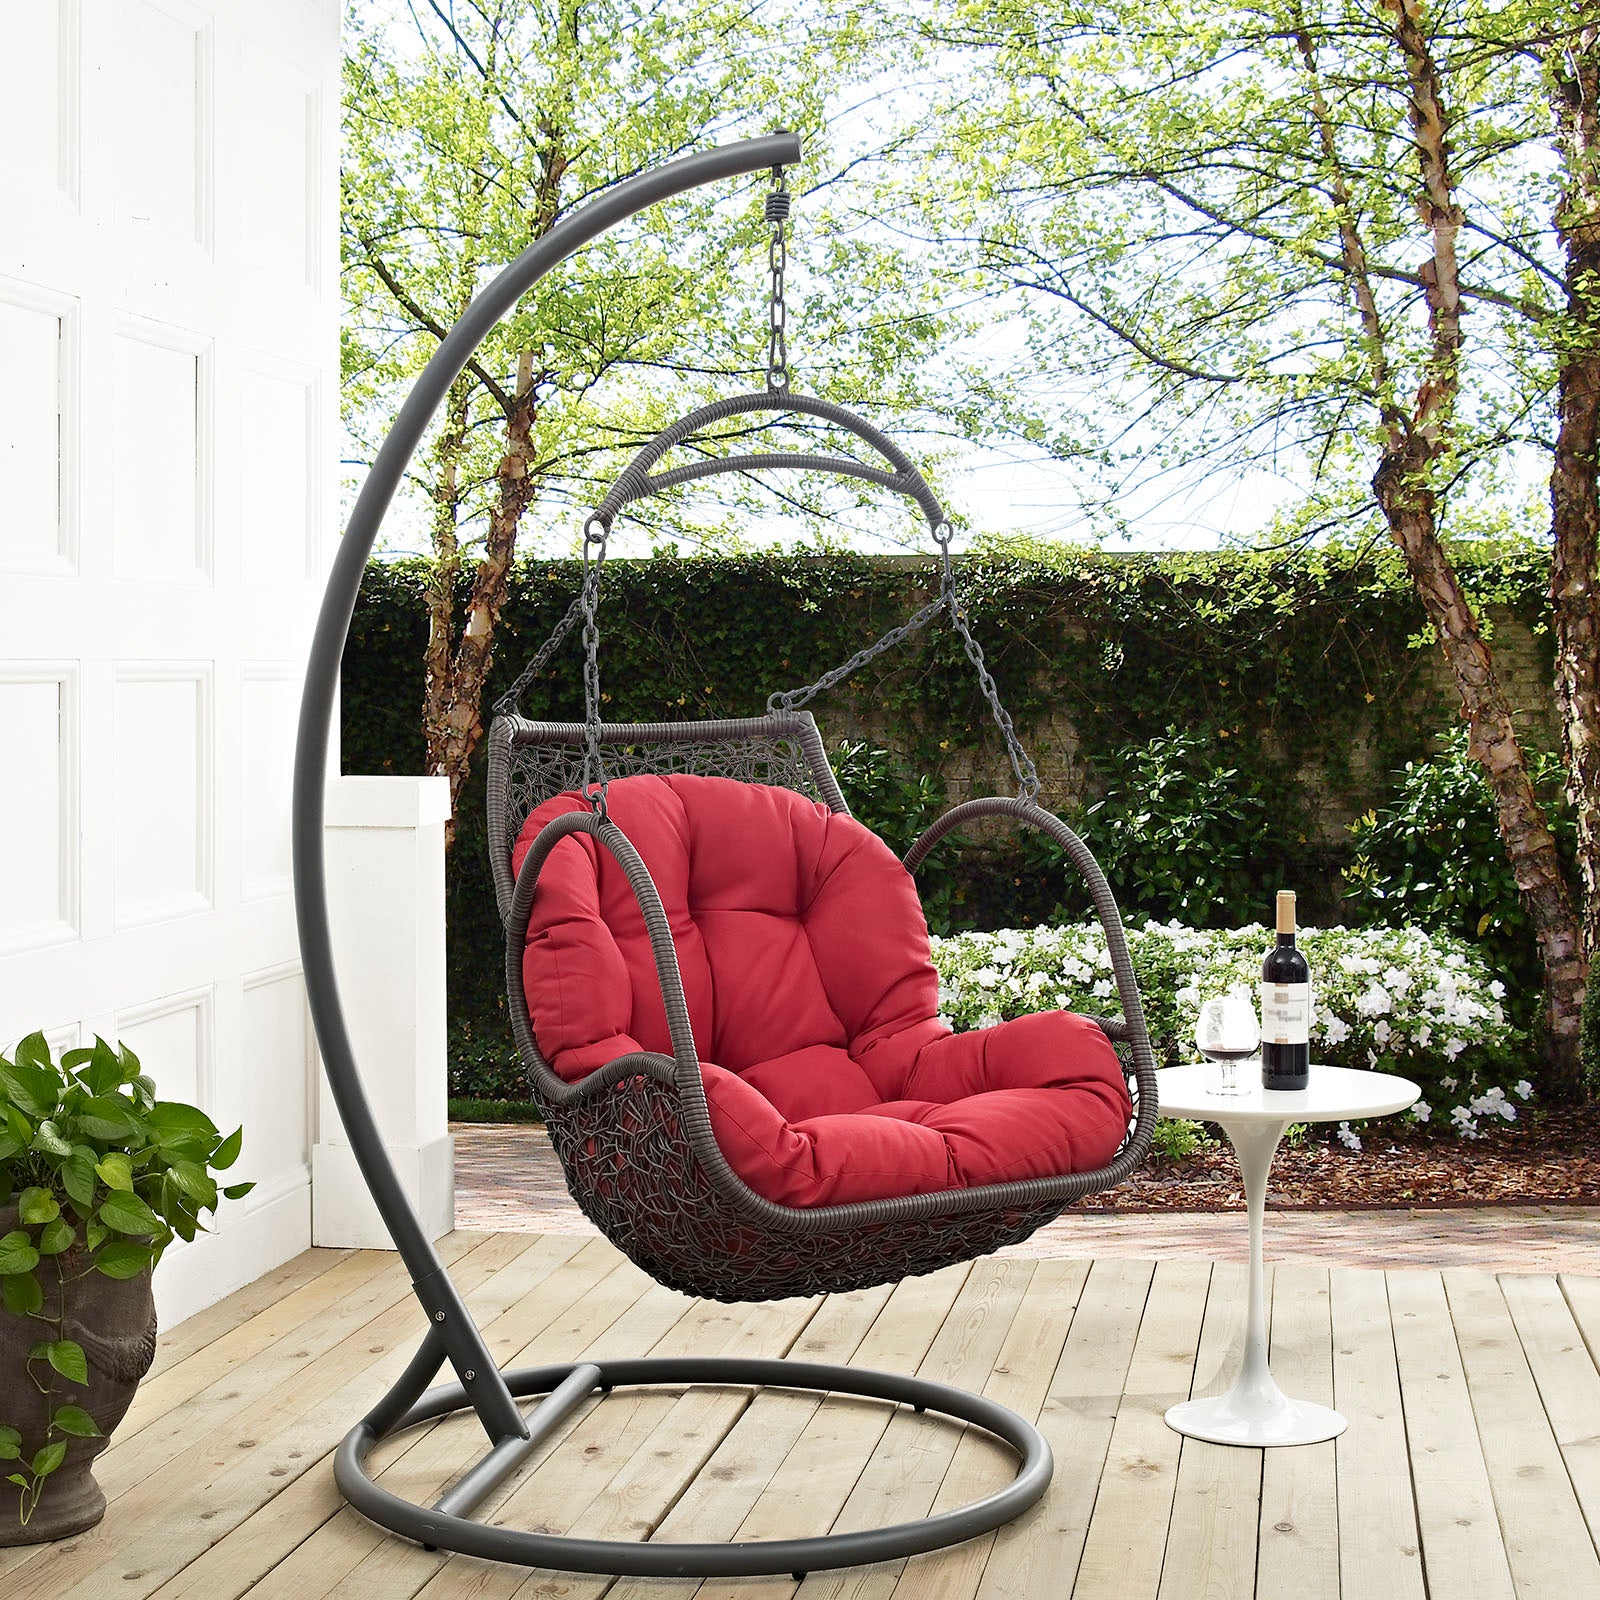 Arbor Outdoor Patio Wood Swing Chair